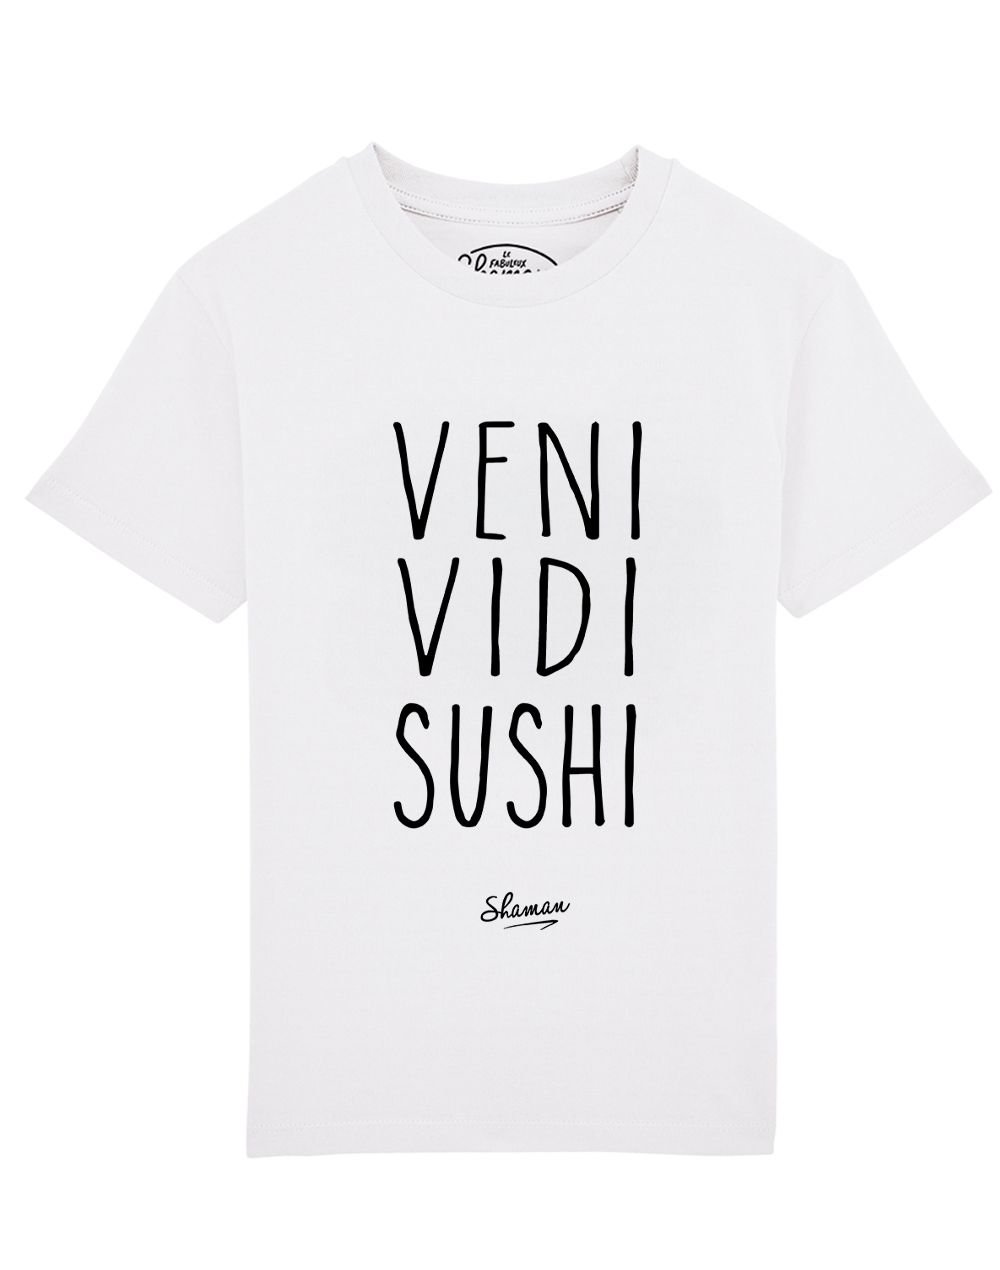 tee shirt veni sushi